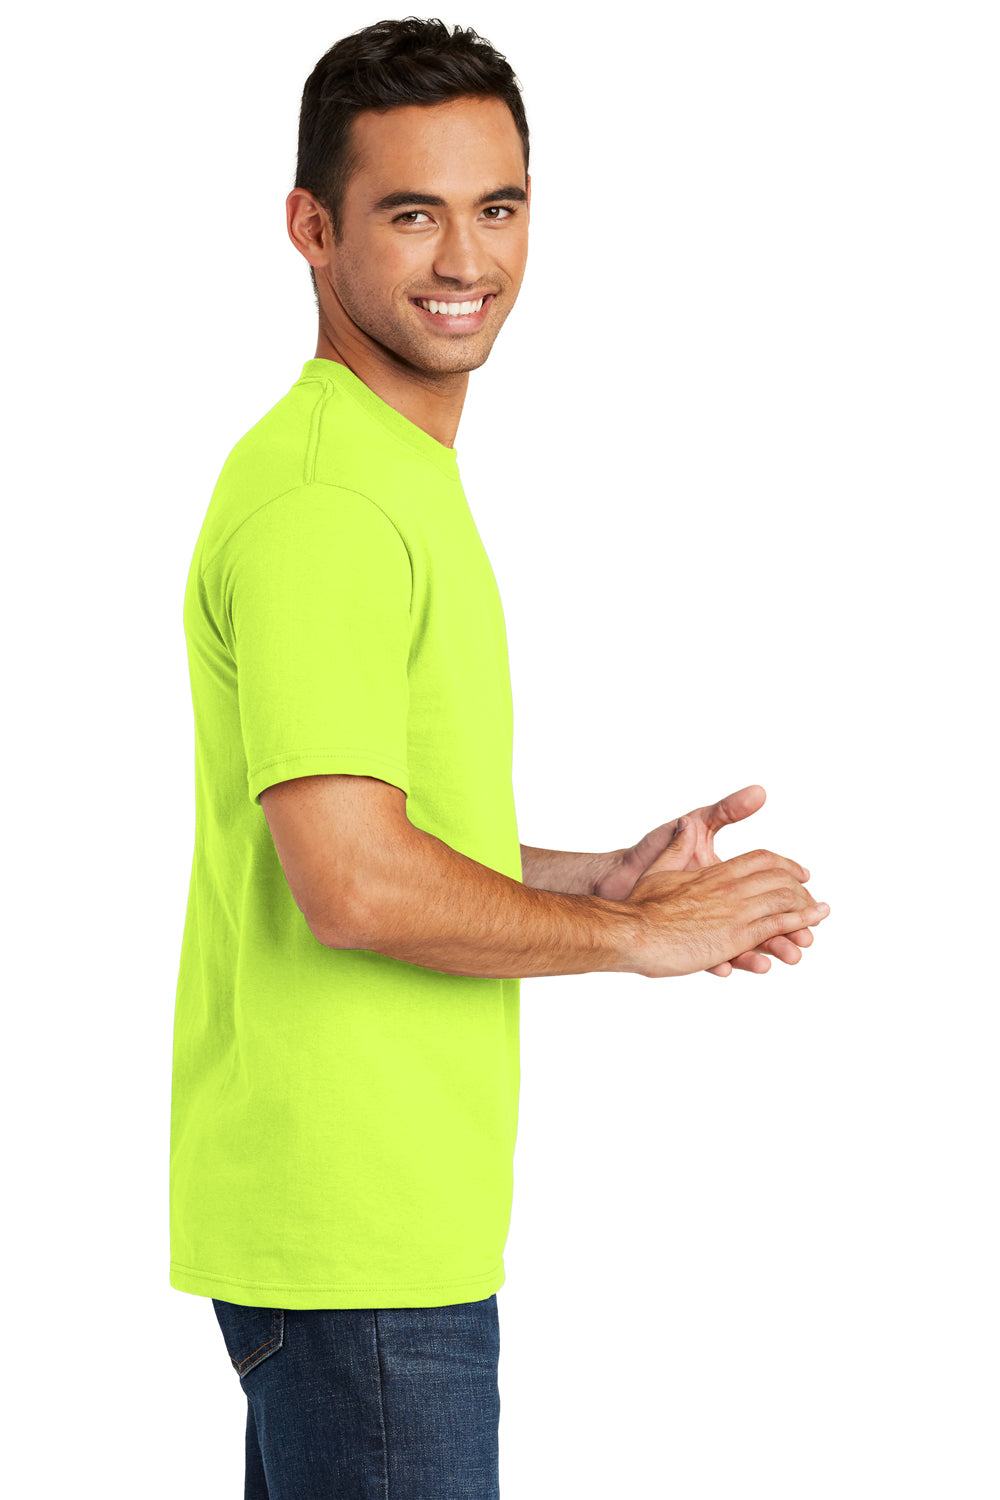 Port & Company USA100 Mens USA Made Short Sleeve Crewneck T-Shirt Safety Green Side